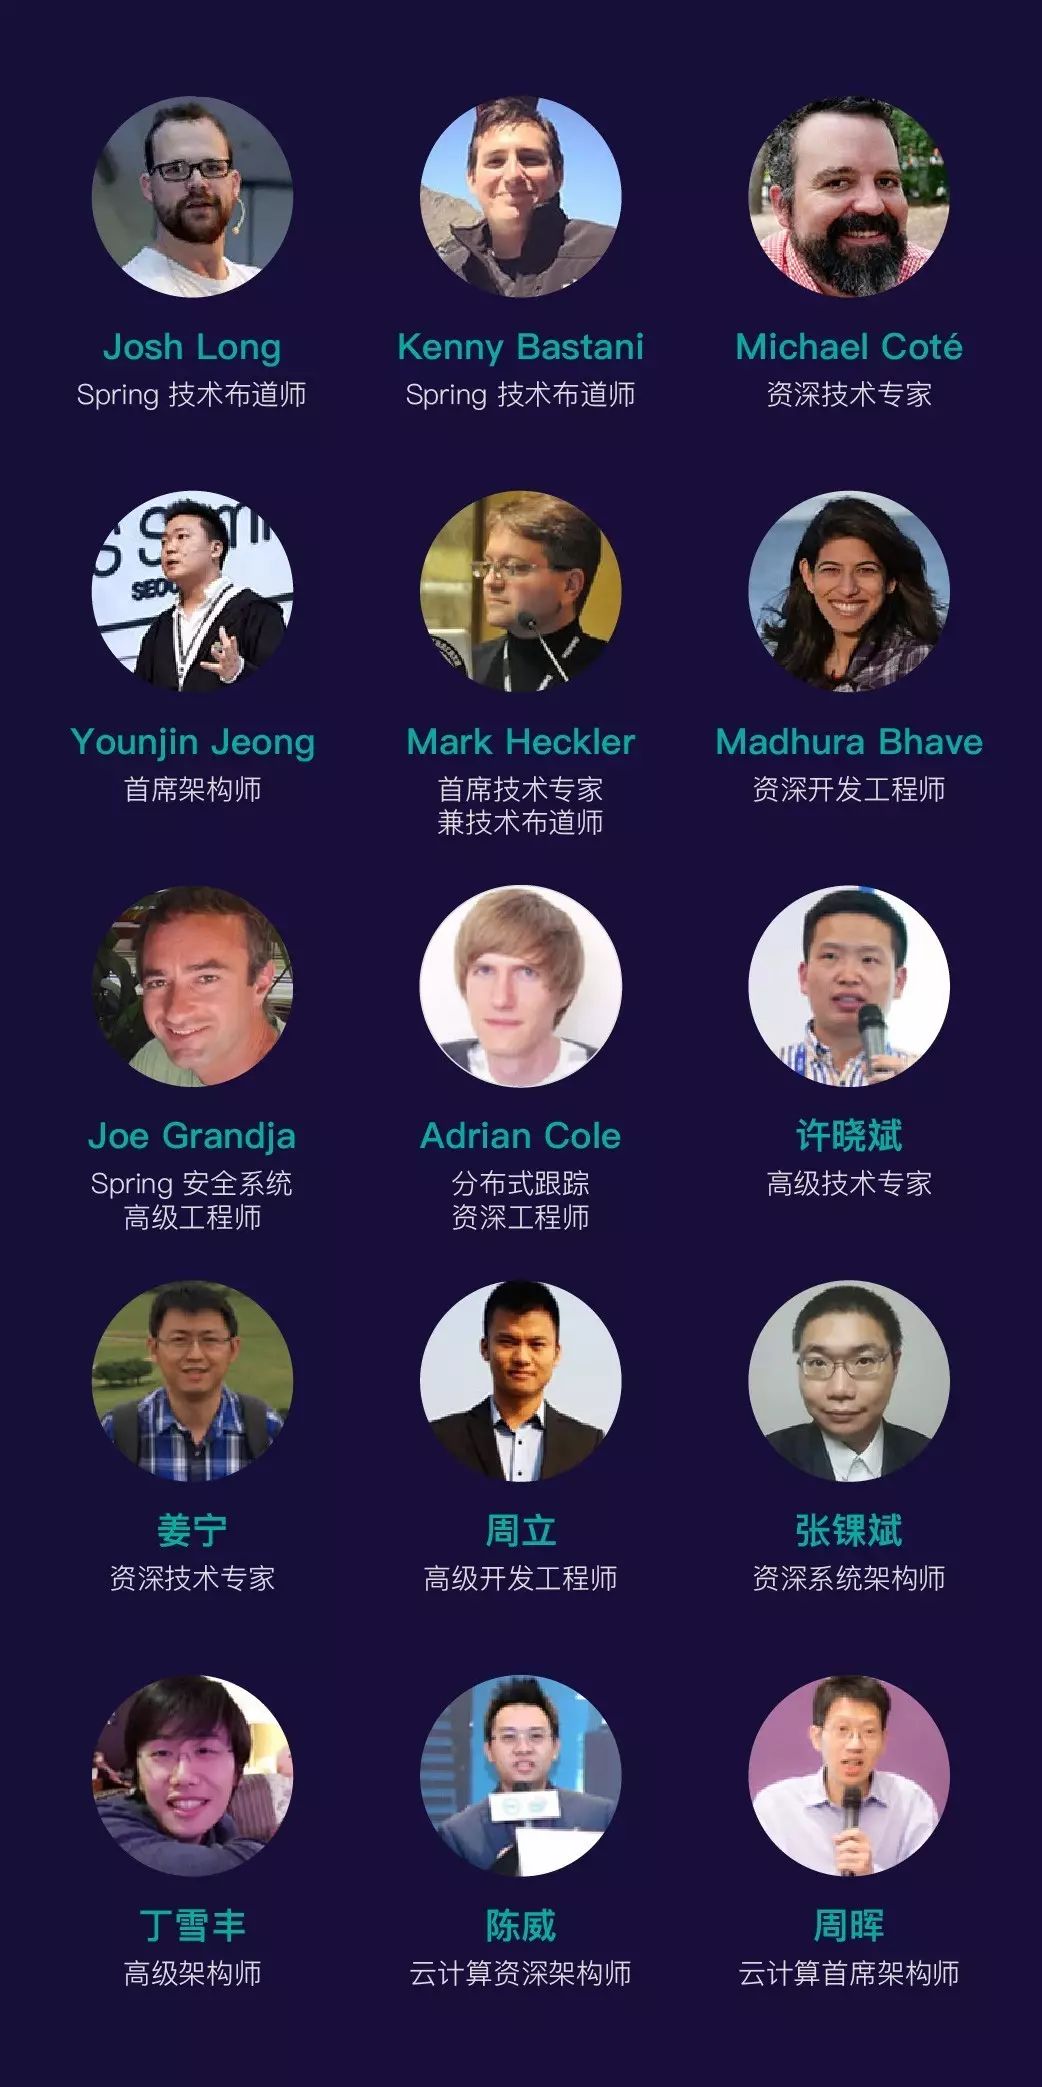 Spring Summit 2017技术峰会8月26日相约北京，Josh Long等众大佬汇聚！千万别错过！ 